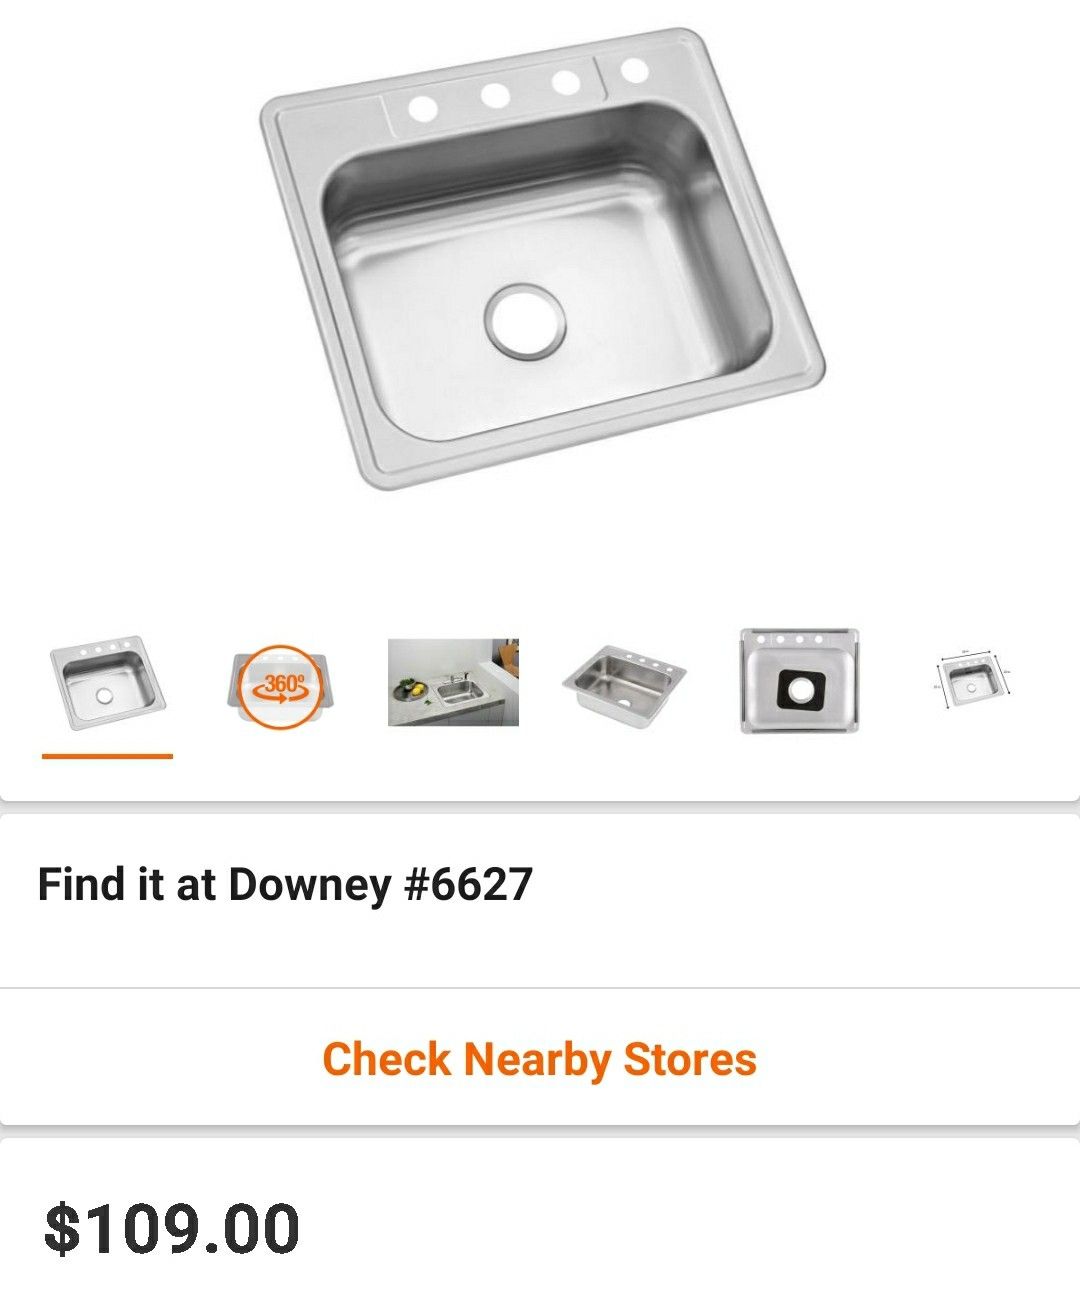 Glacier Bay Drop-In Stainless Steel 25 in. 4-Hole Single Bowl Kitchen Sink